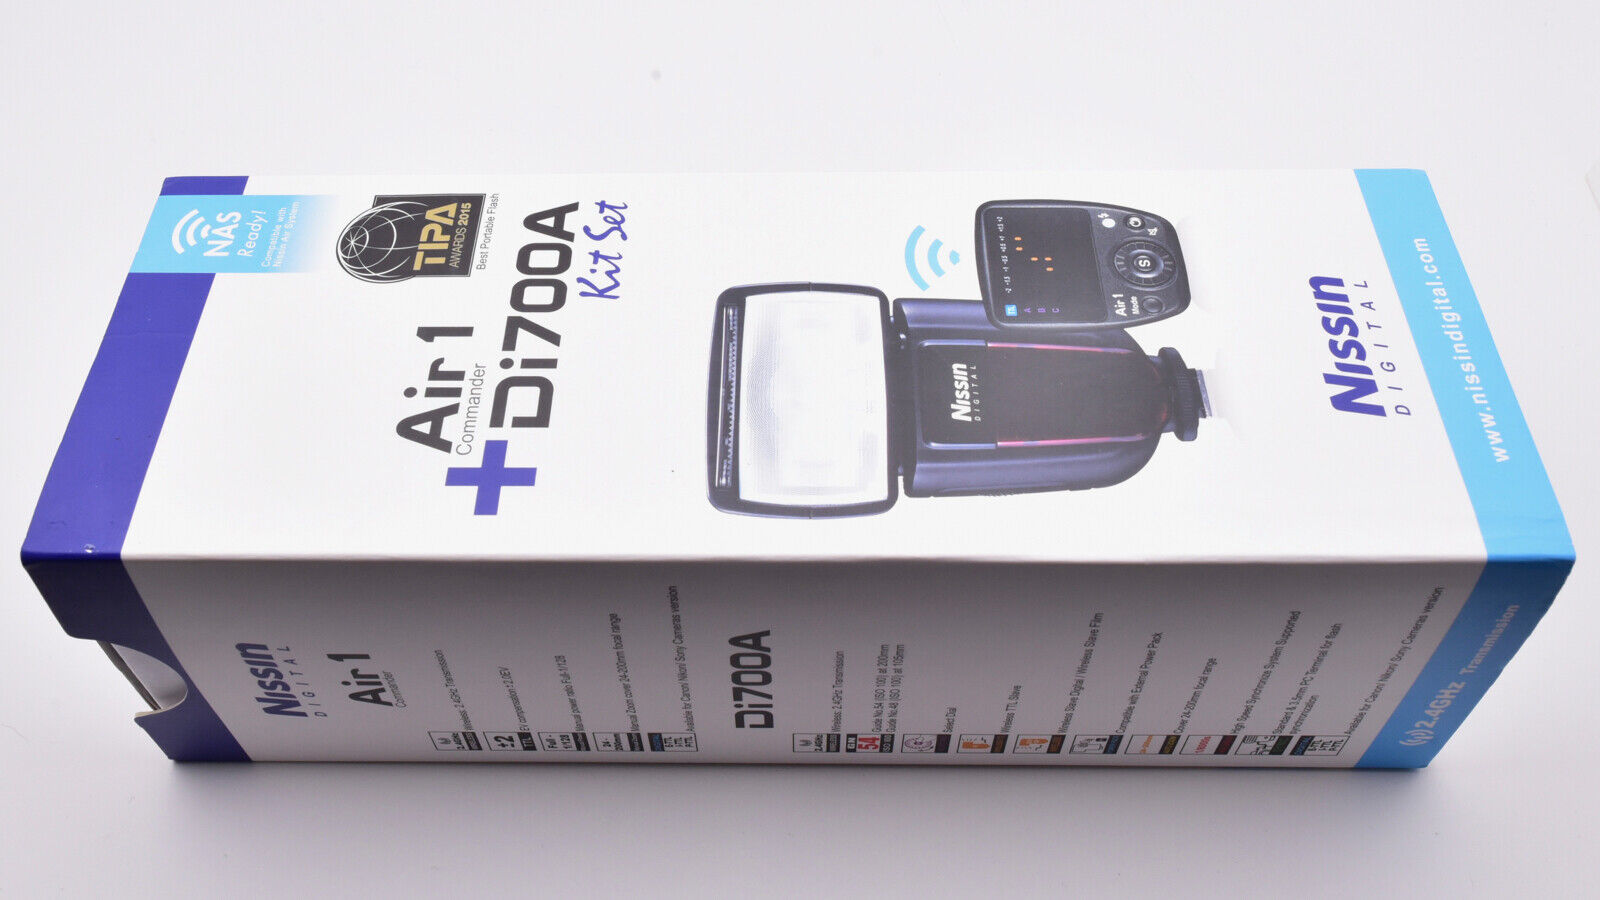 Nissin Di700A Flash Kit with Air 1 Commander for Fujifilm ND700AK-FJ  (#10019) Super opłacalna, wysoka jakość